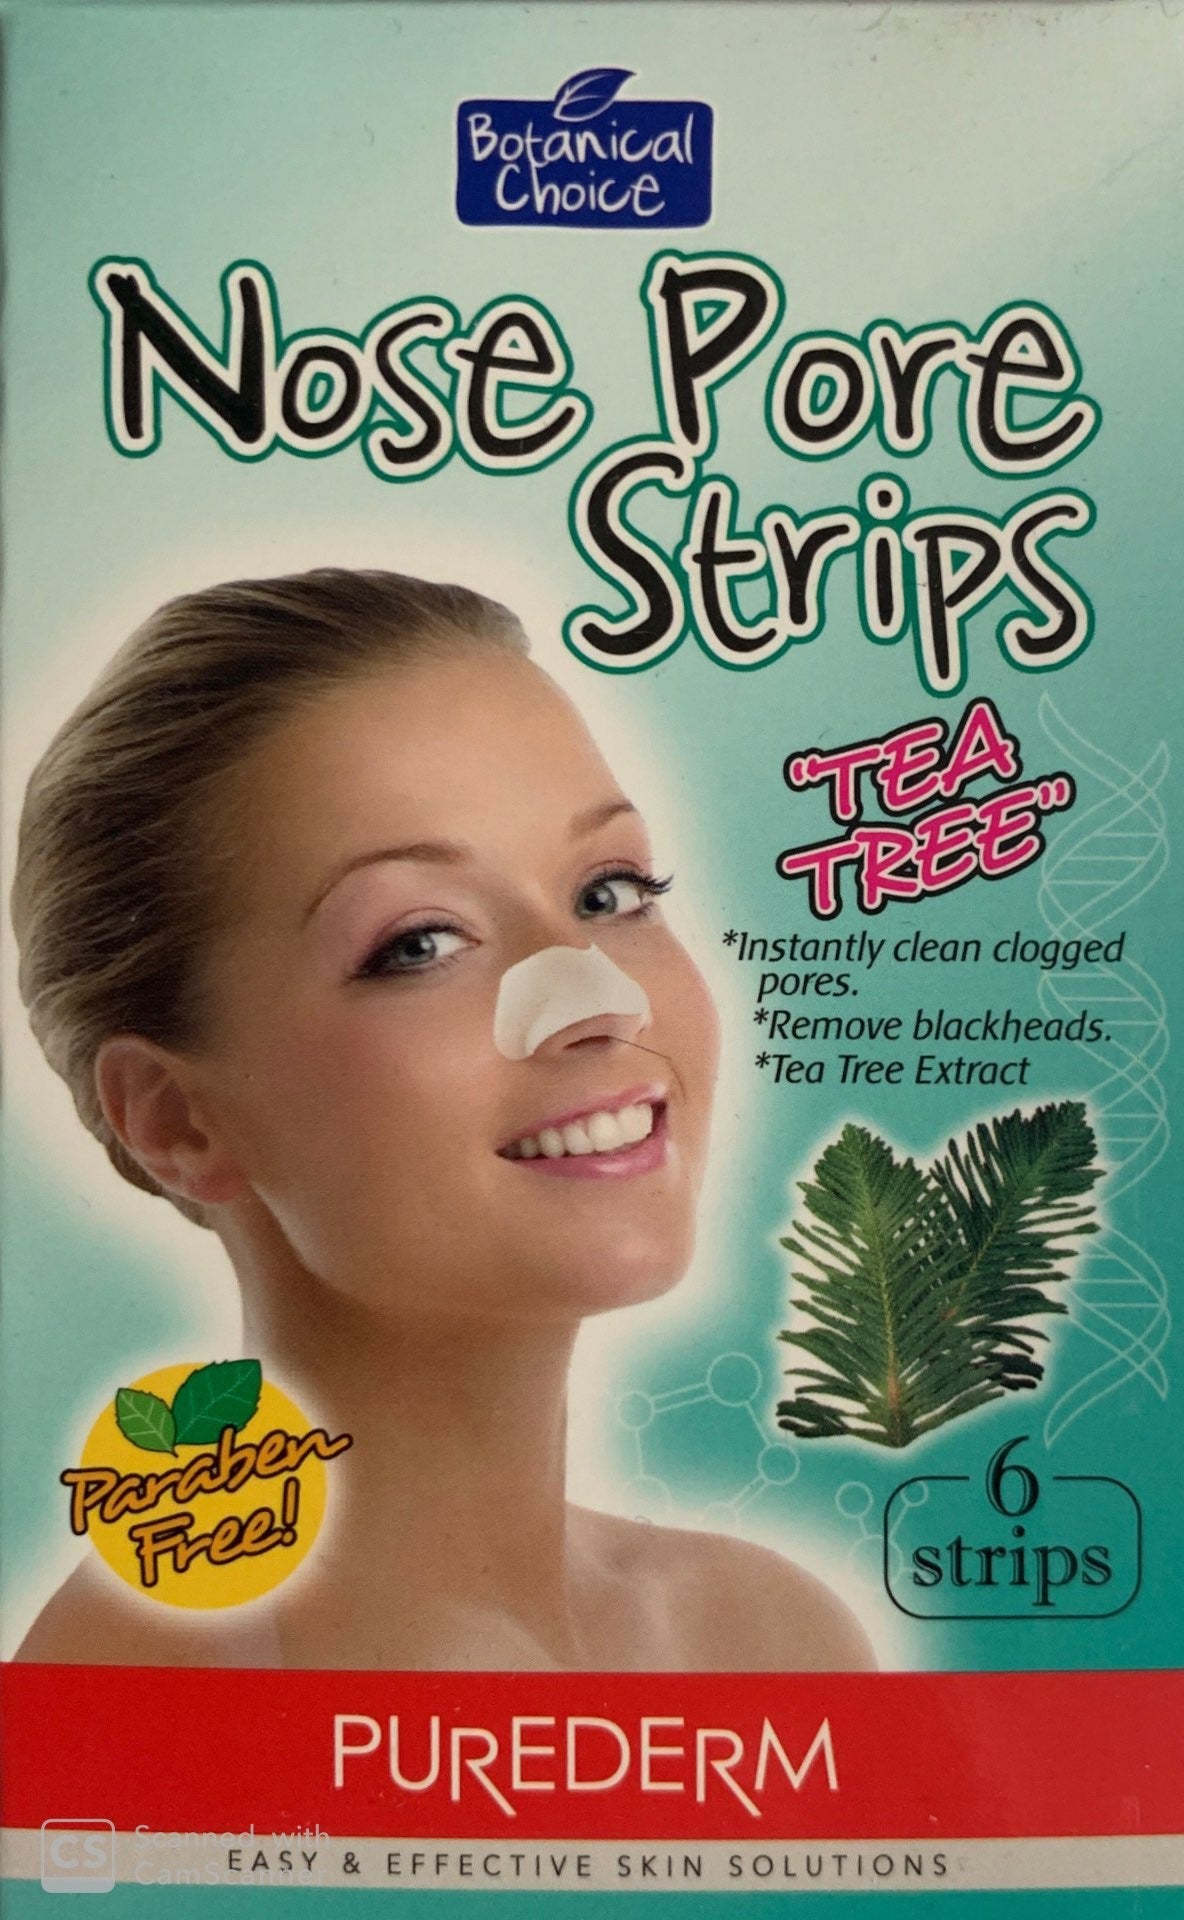 Purederm Botanical Choice Nose Pore Strips Tea Tree - Paraben Free 6 Strips